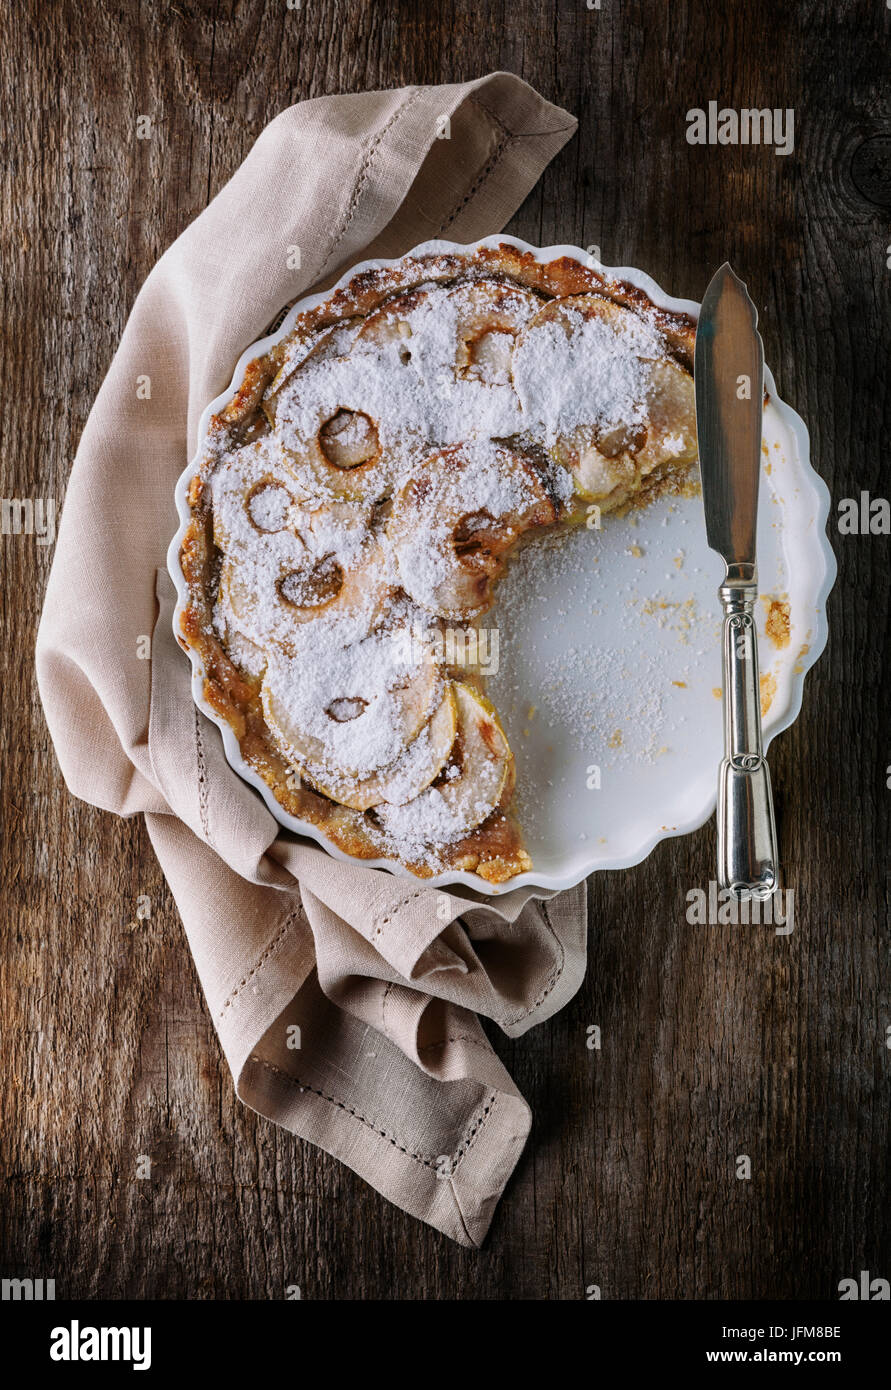 Apple pie on wooden table Stock Photo